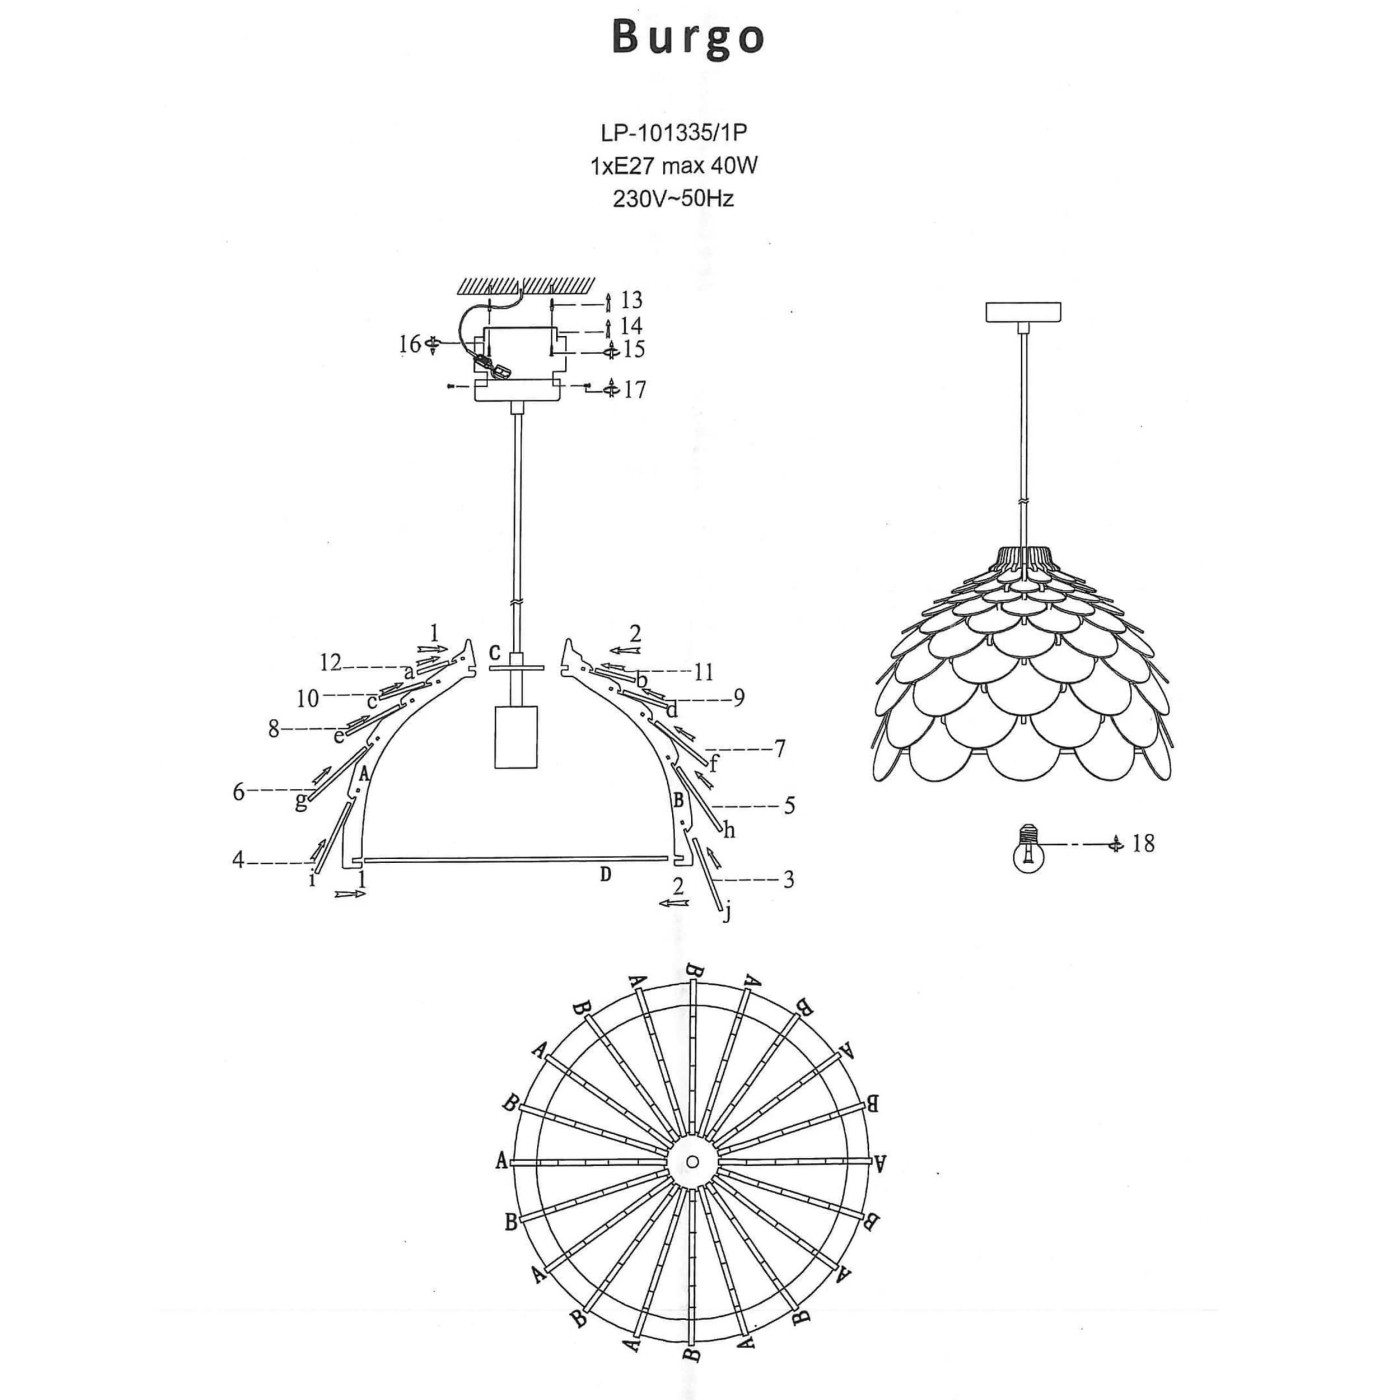 BURGO S LP-101335/1P S